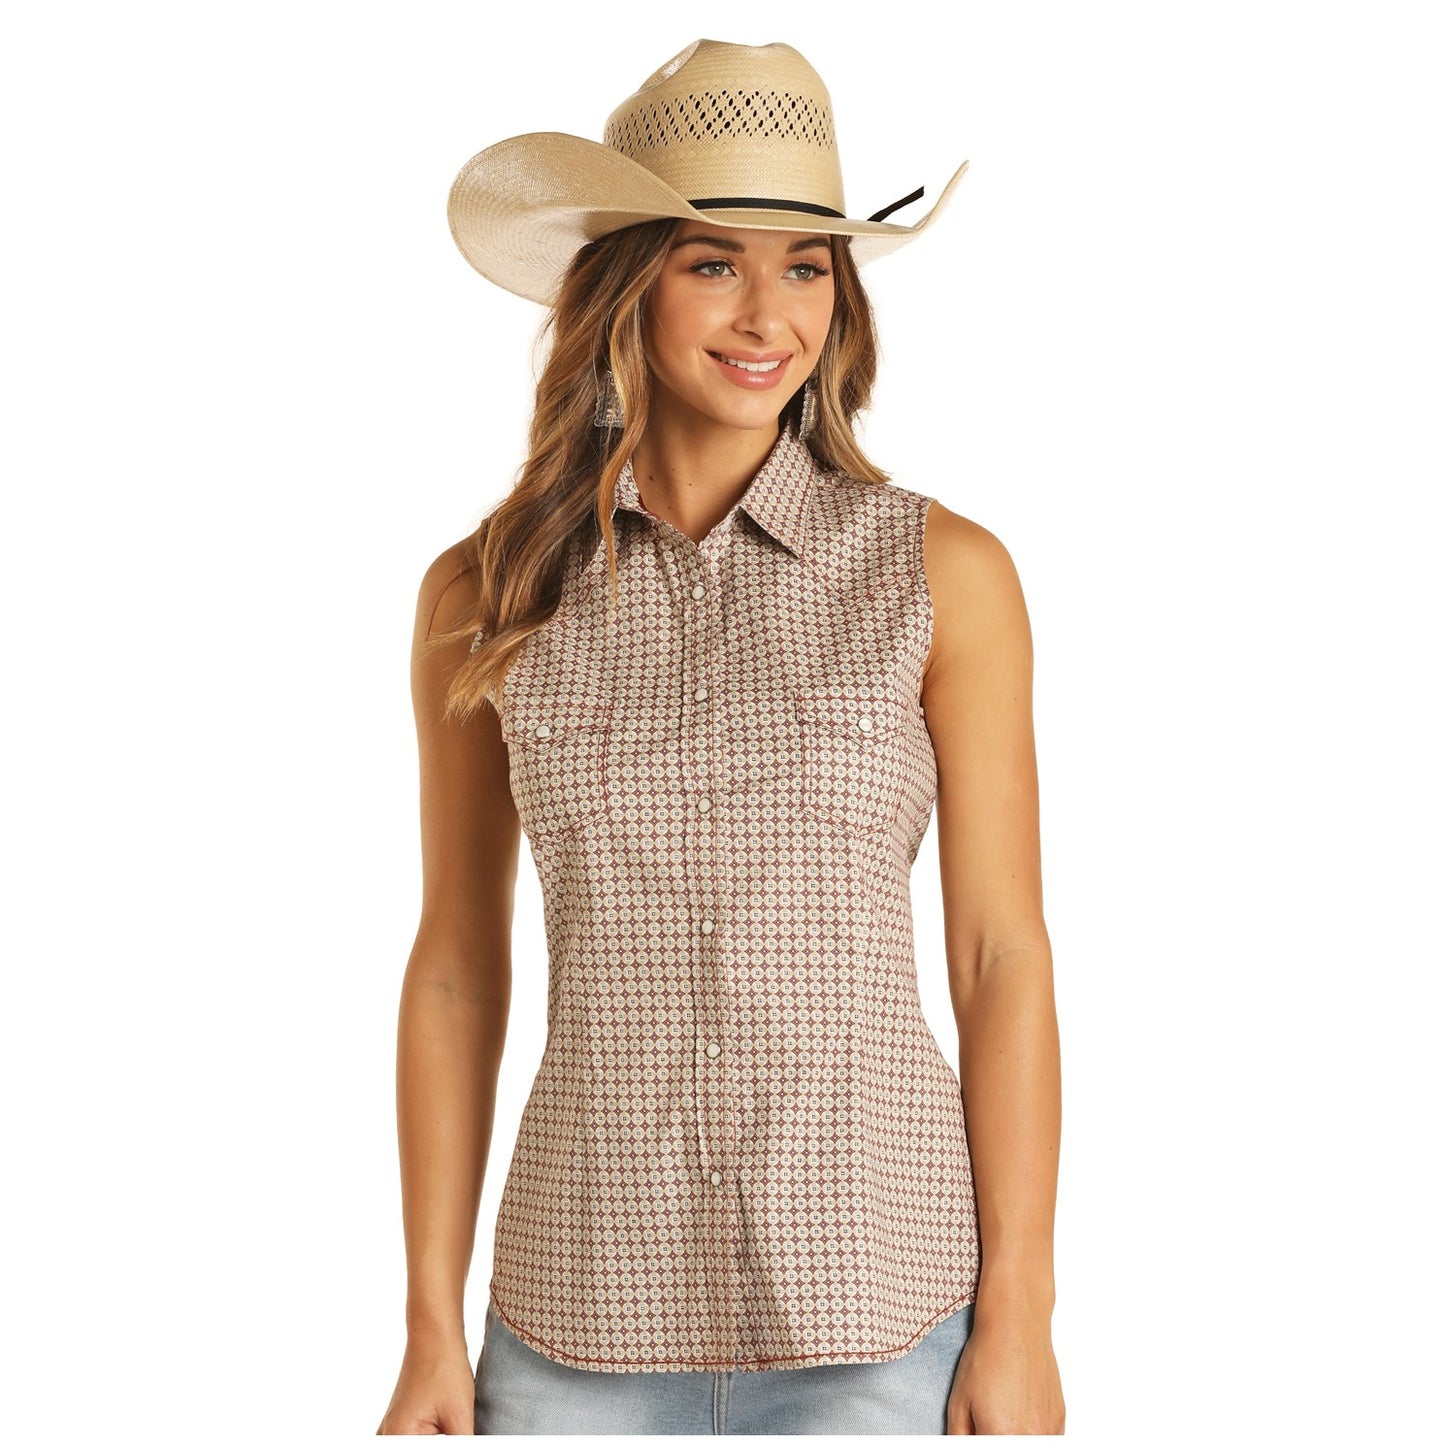 Panhandle Rough Stock Ladies Khaki Snap Tank Top Shirt R5-9016